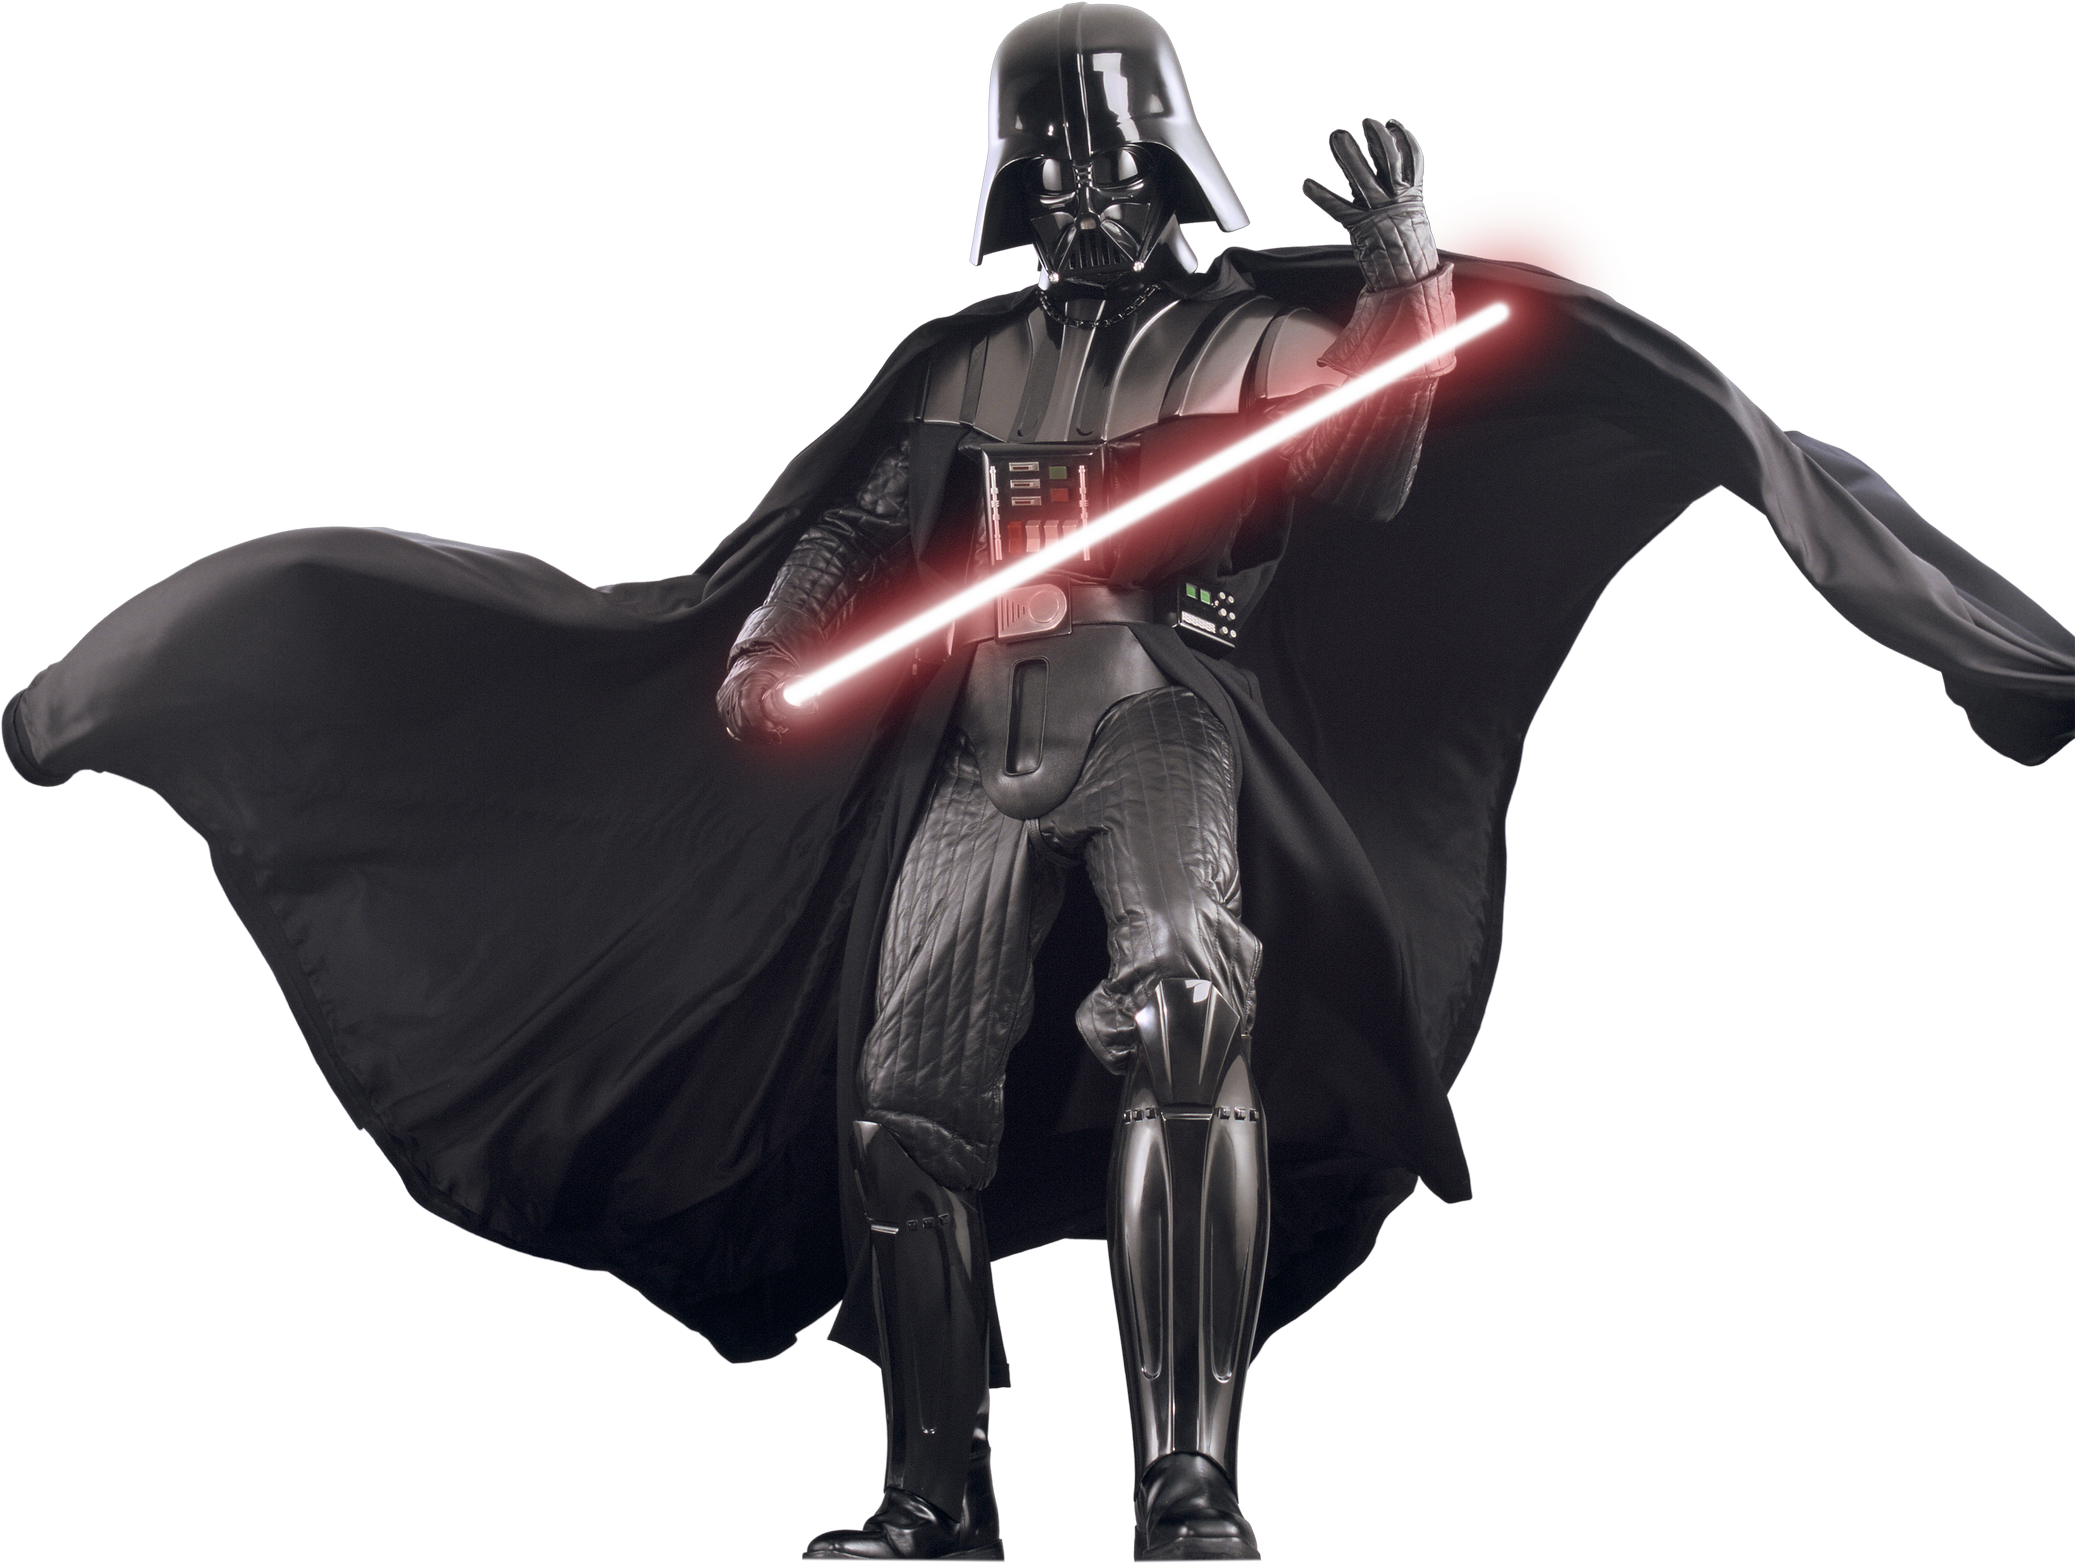 Darth Star Wars Vader PNG Image High Quality PNG Image